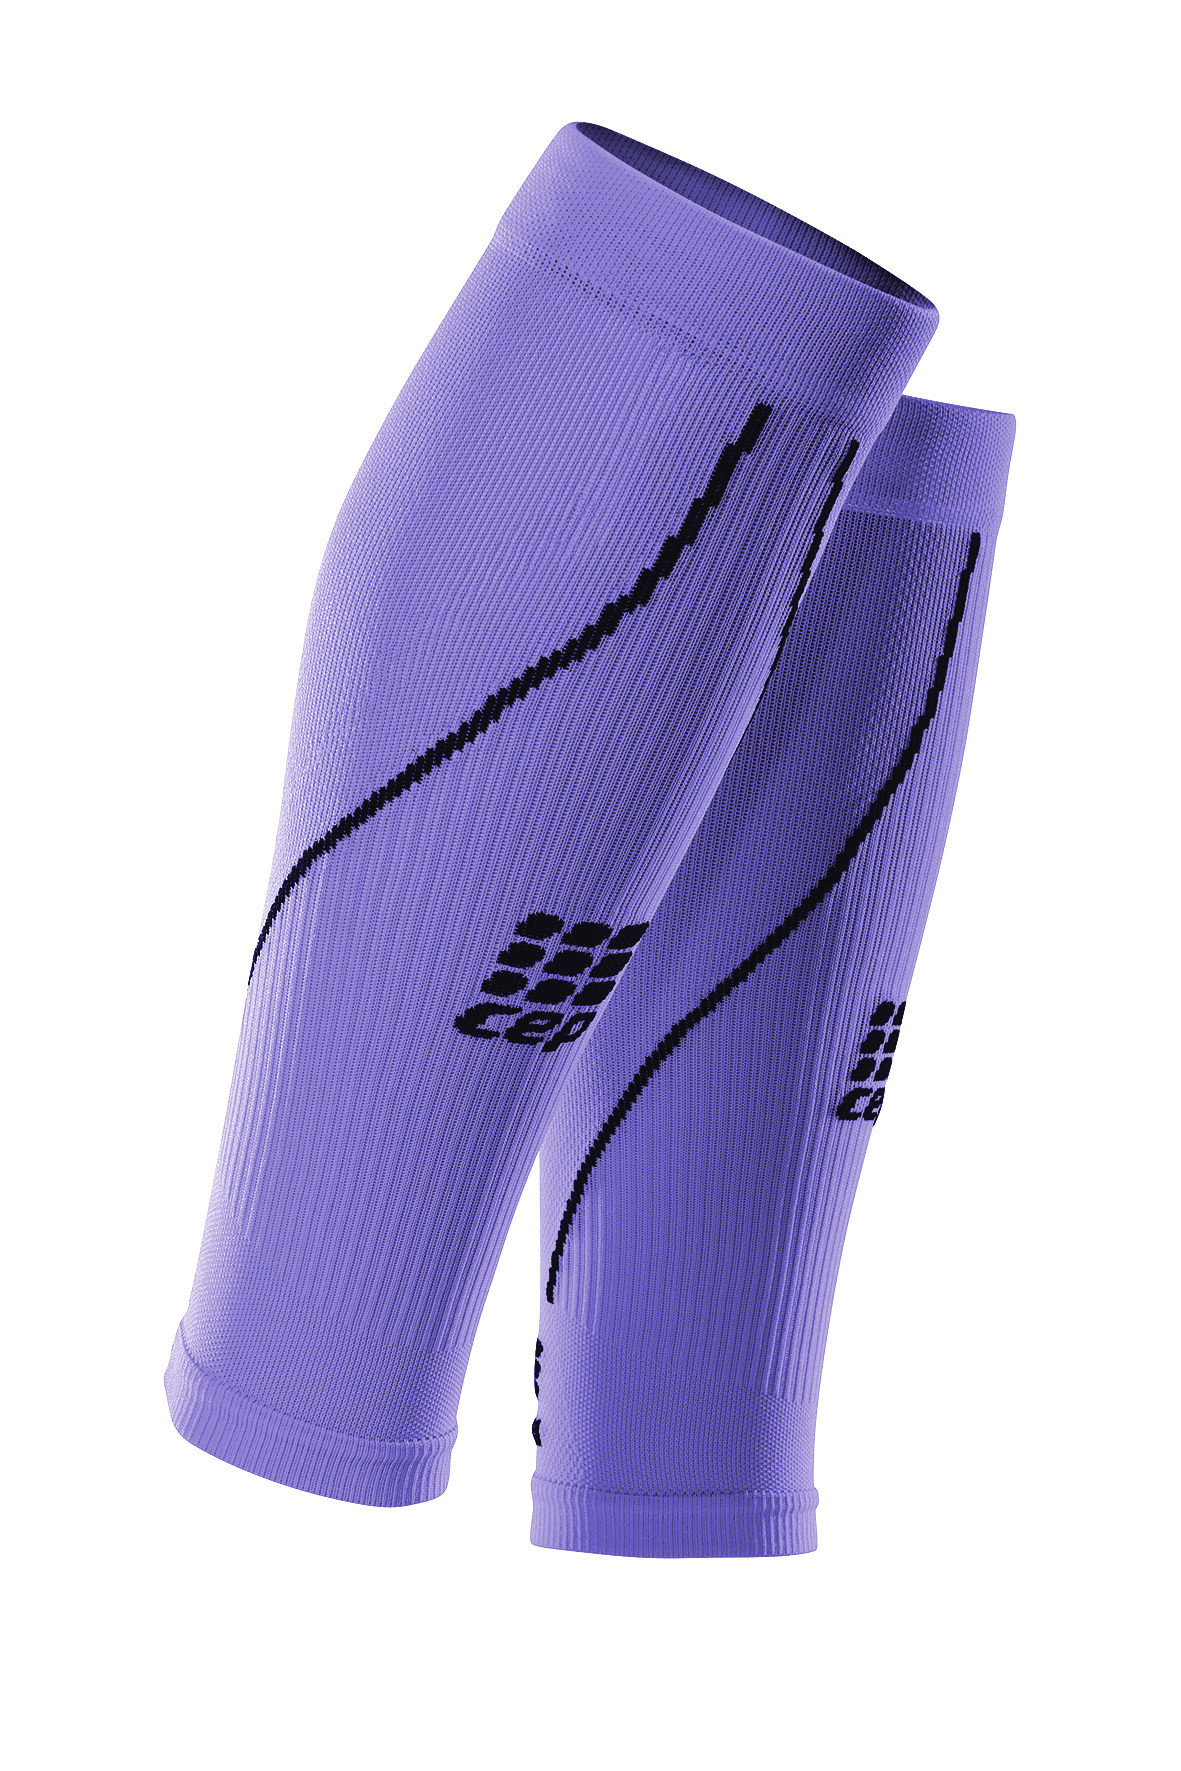 Womens Calf Compression Sleeves - CEP Running 2.0 (Hawaii Blue/Pink) II 